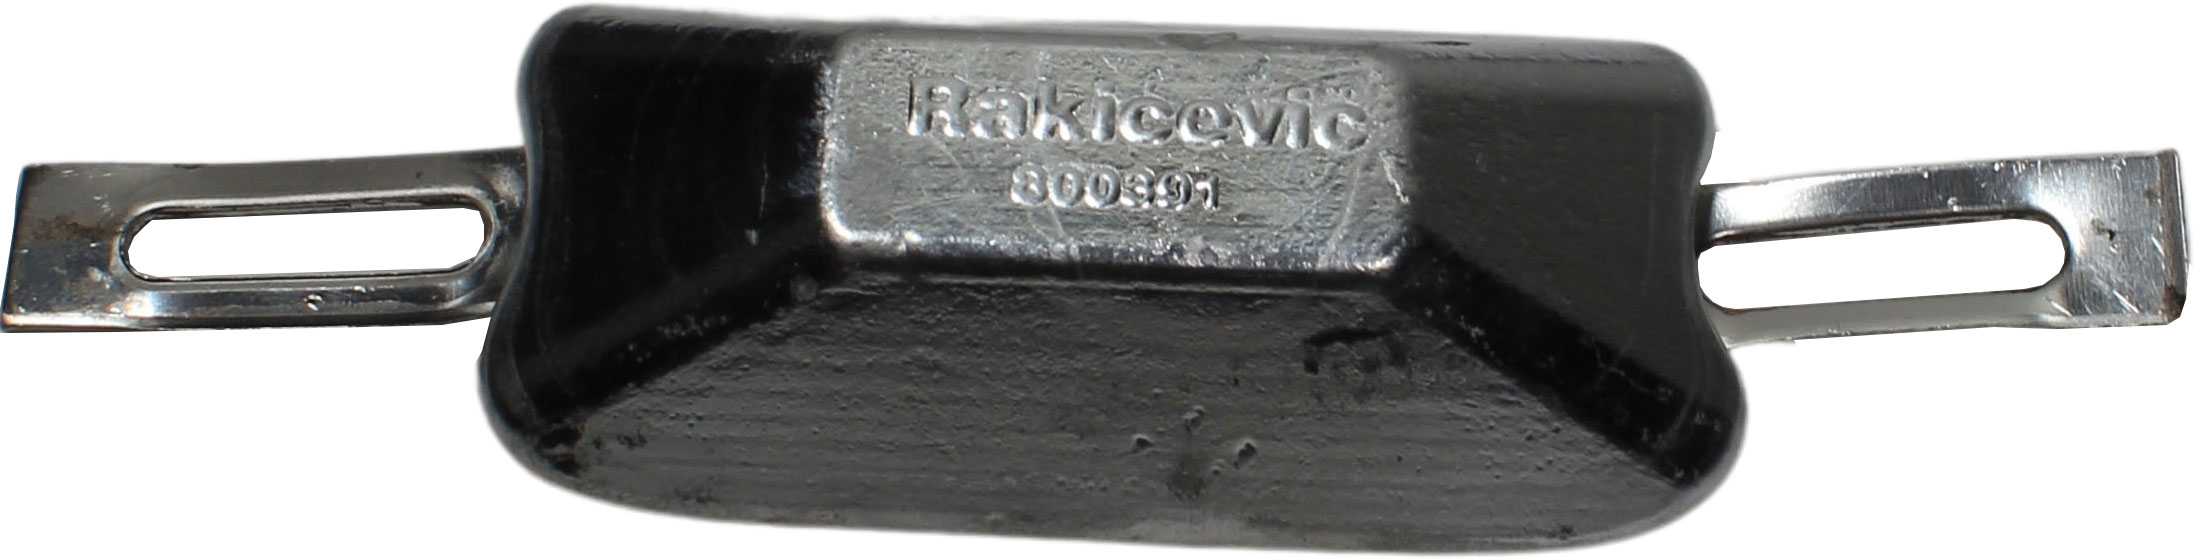 1852 Skroganode i aluminium